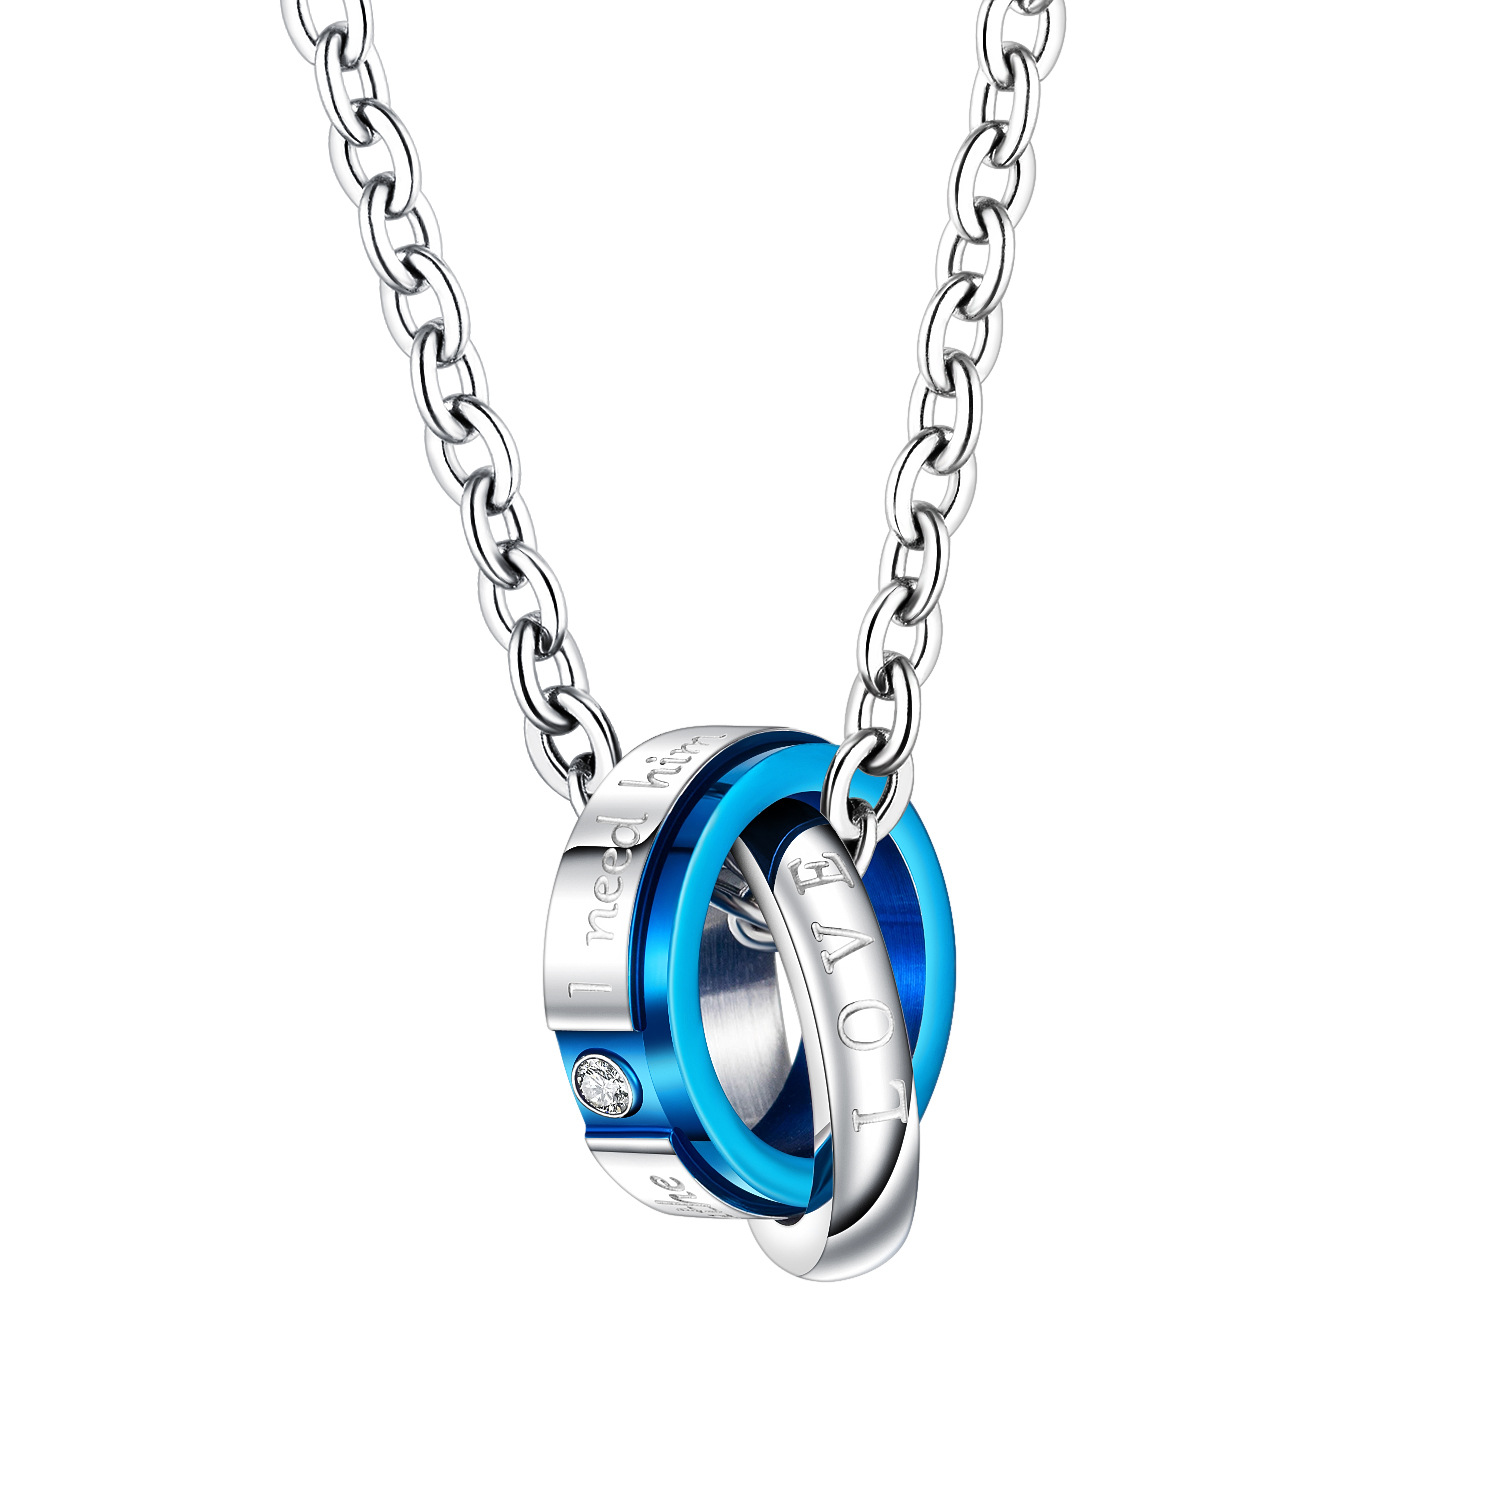 Blue men's pendant + distribution chain (with GL62